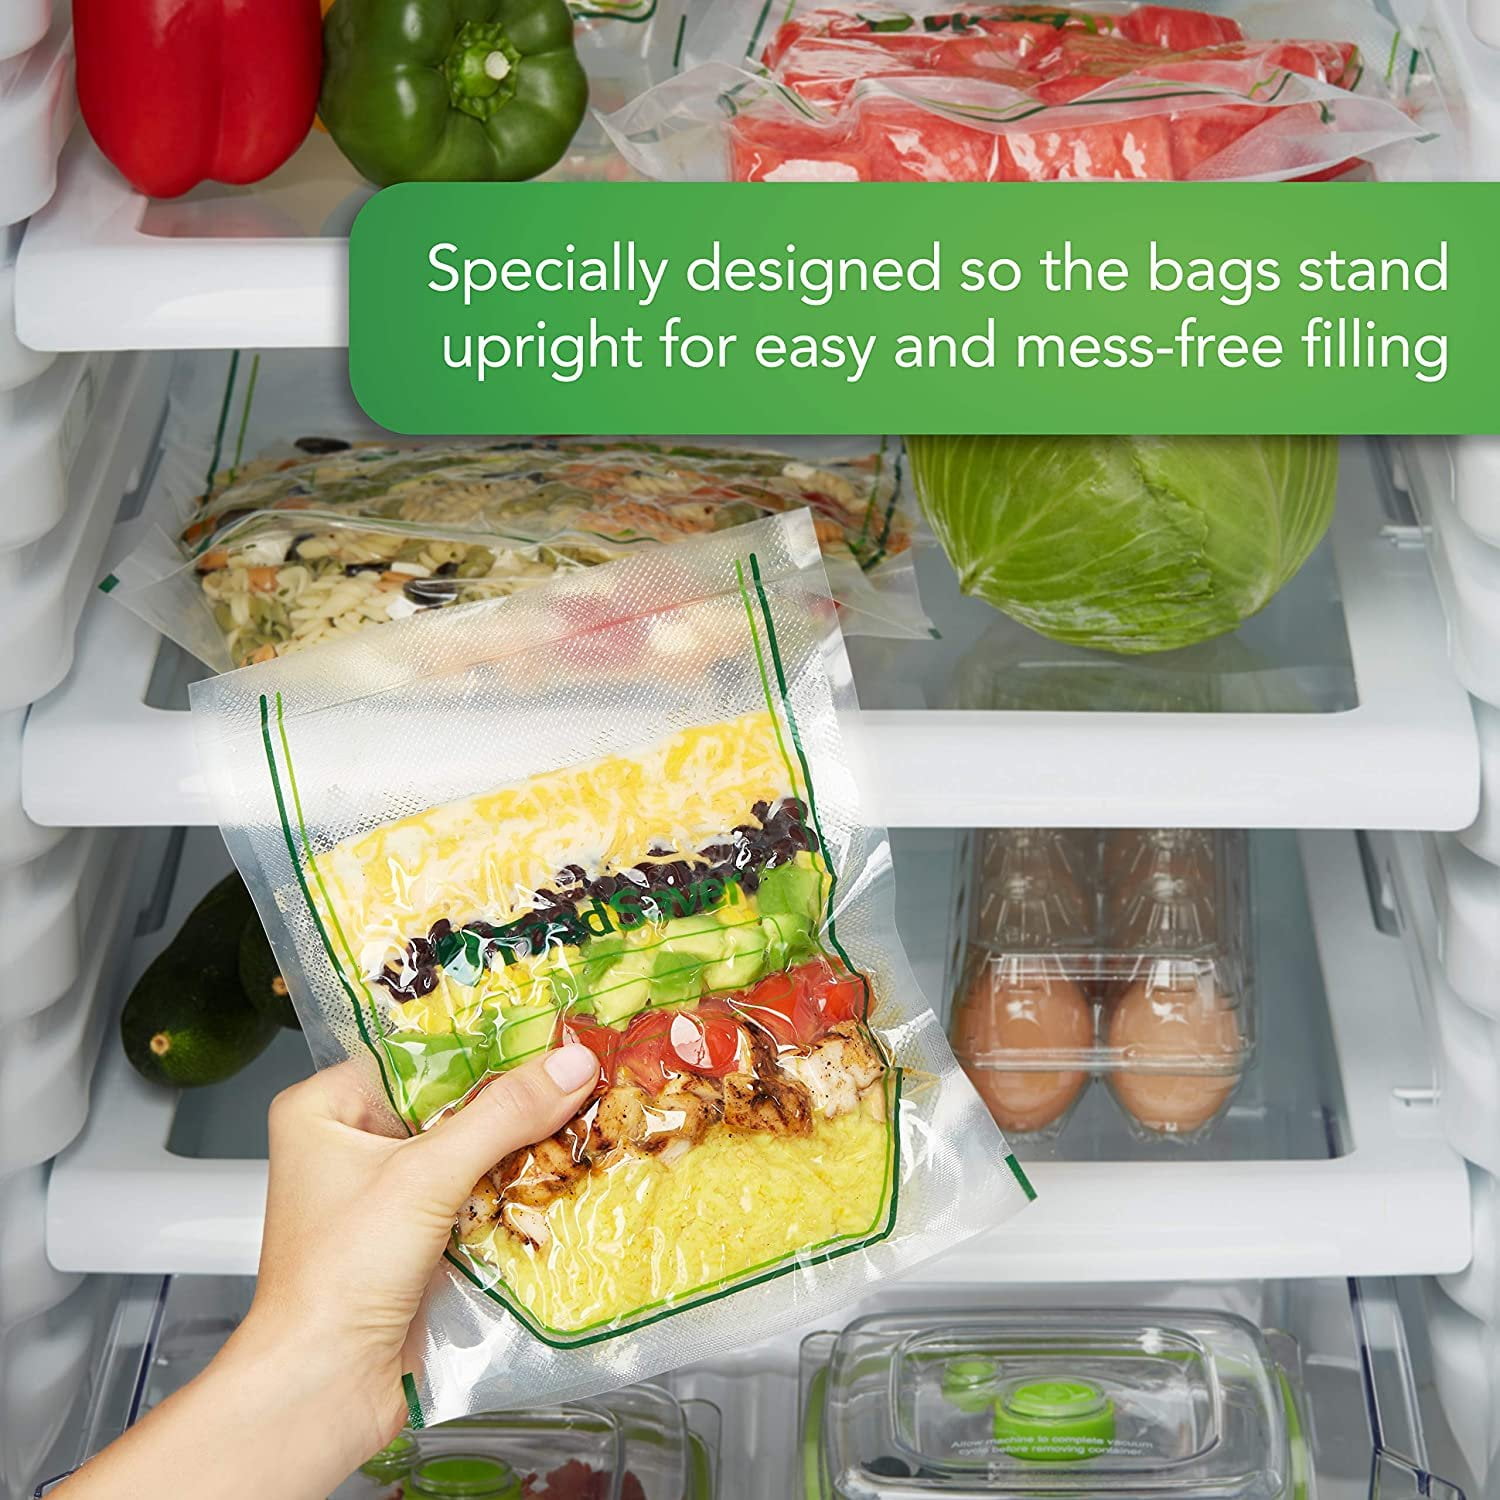 FoodSaver Easy Fill Gallon Bags, 10 pk - Metro Market